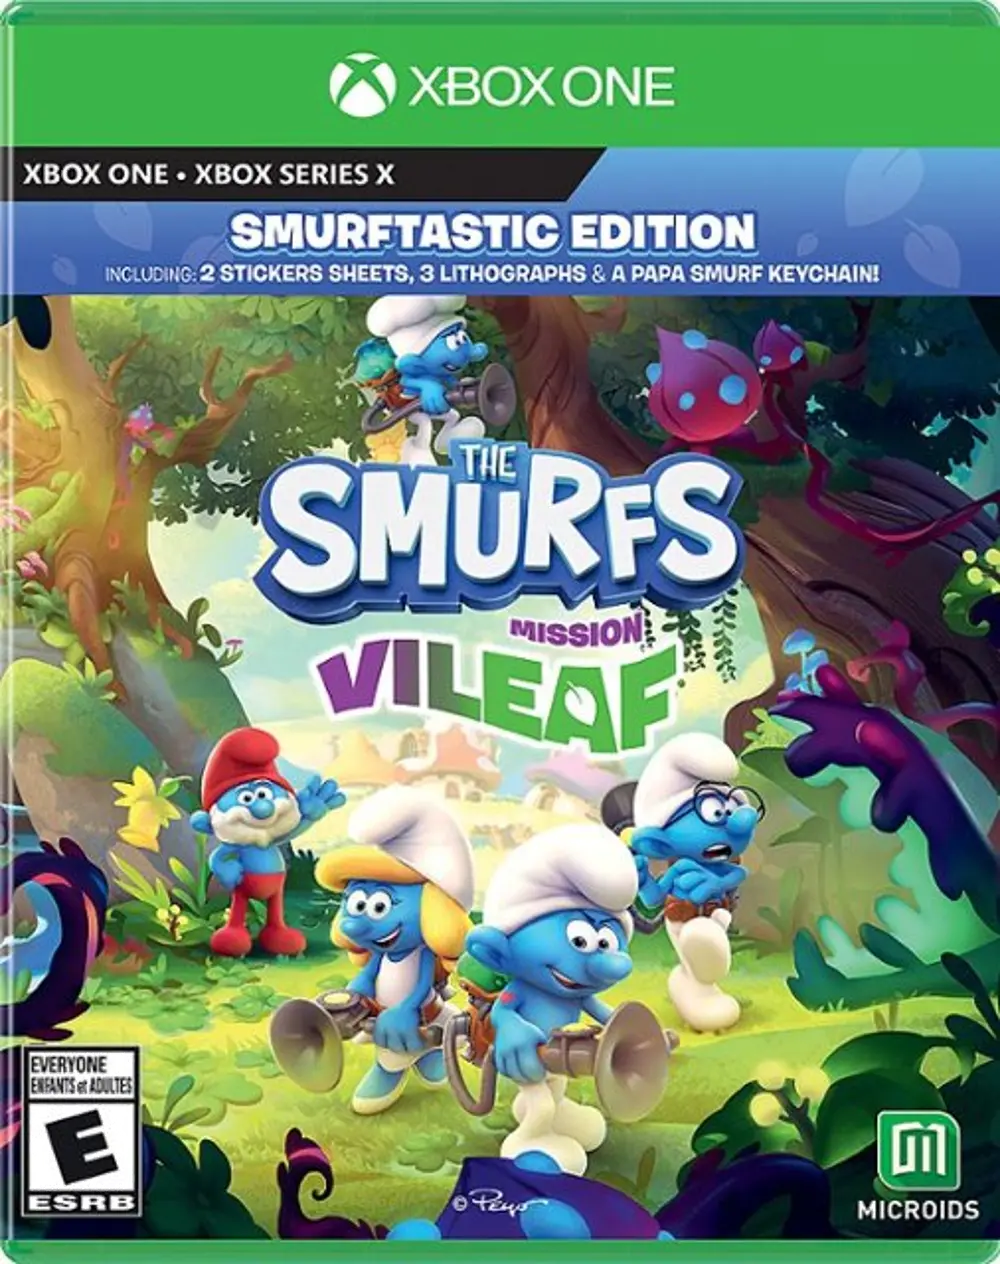 XB1/SMURFS_MISSION_V The Smurfs - Mission Vileaf - Smurftastic Edition - Xbox One-1